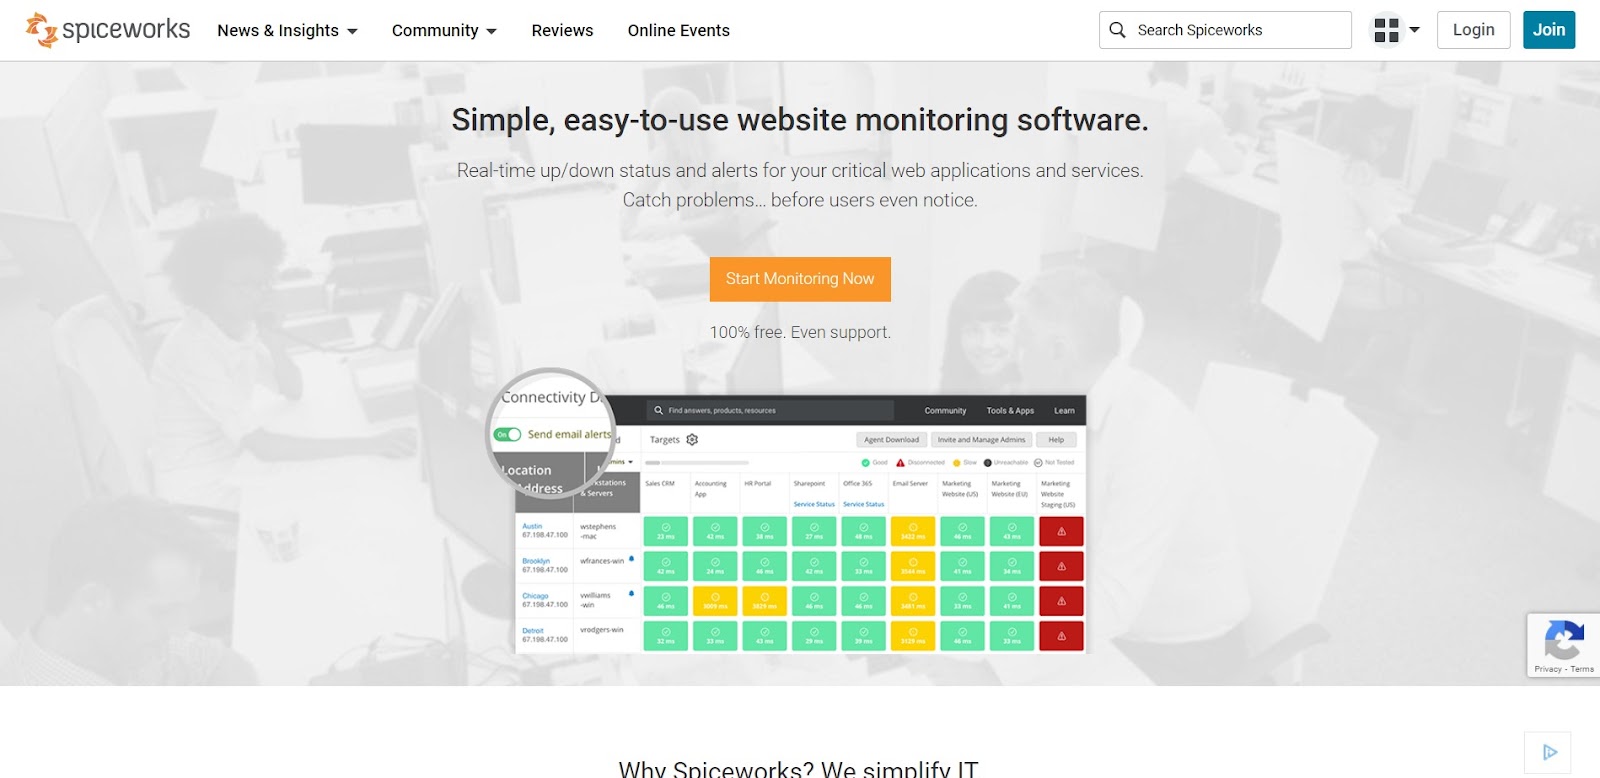 A screenshot of Spiceworks' website